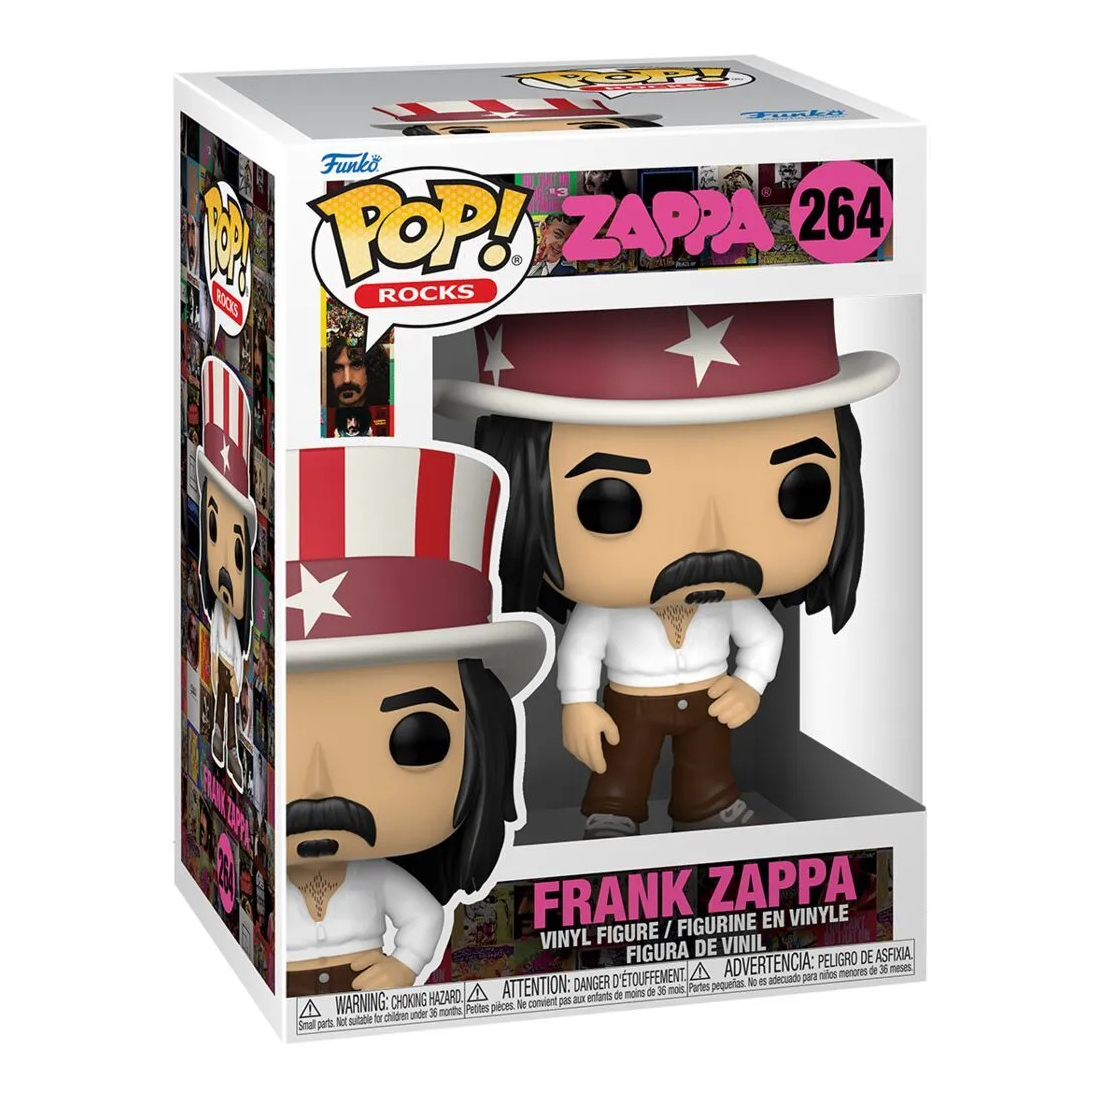 Фигурка Funko Pop! Rocks Frank Zappa фигурка funko pop rocks korn – jonathan davis 9 5 см